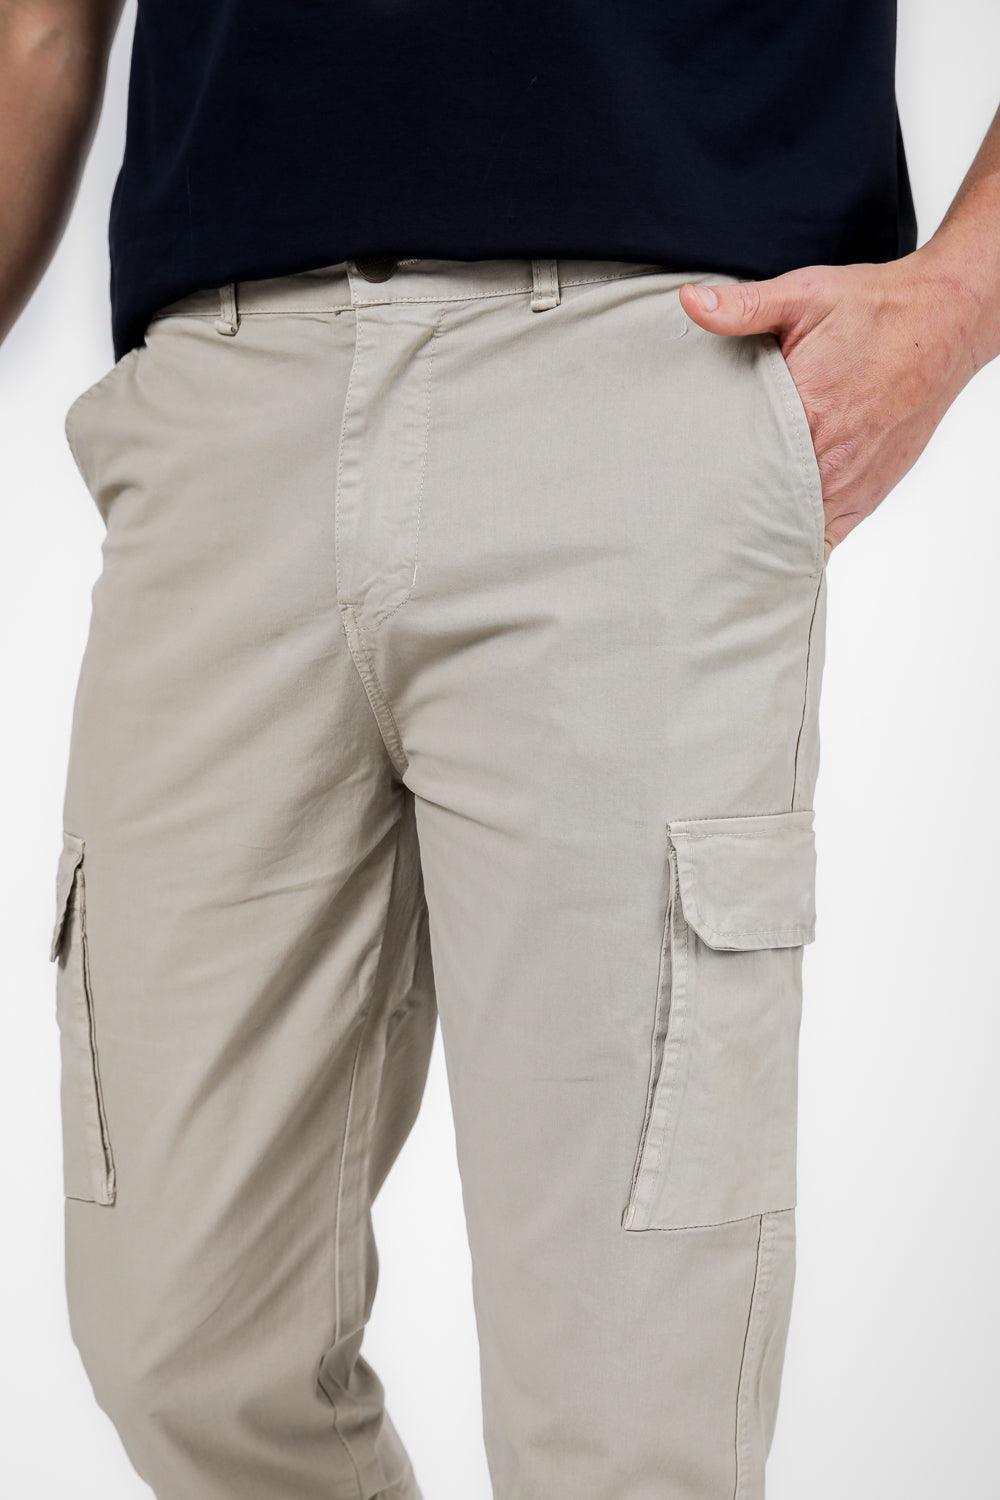 SCORCHER - מכנסי דגמ"ח CLASSIC בצבע חאקי - MASHBIR//365